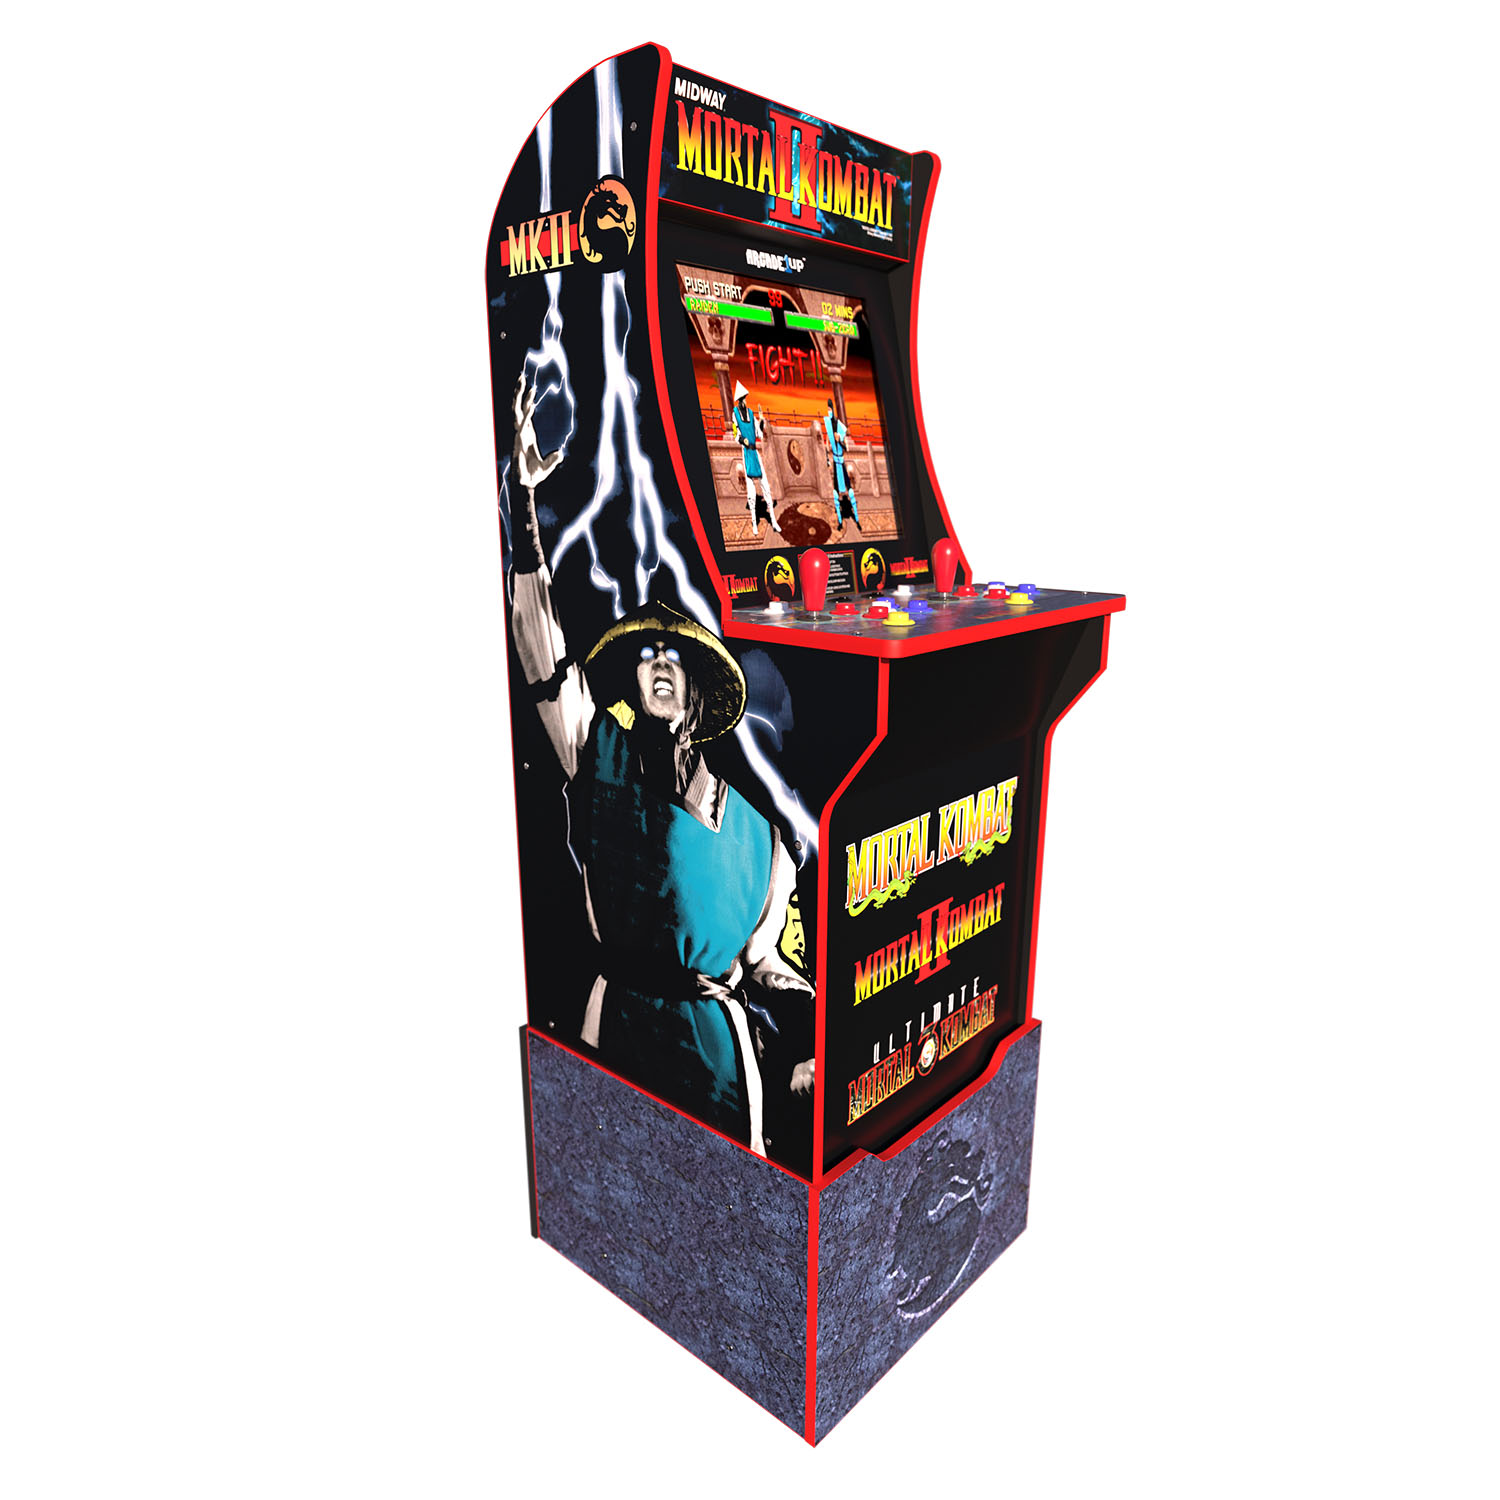 Mortal Kombat Arcade Machine w/ Riser, Arcade1UP (Includes Mortal Kombat I, II, III) - image 1 of 5